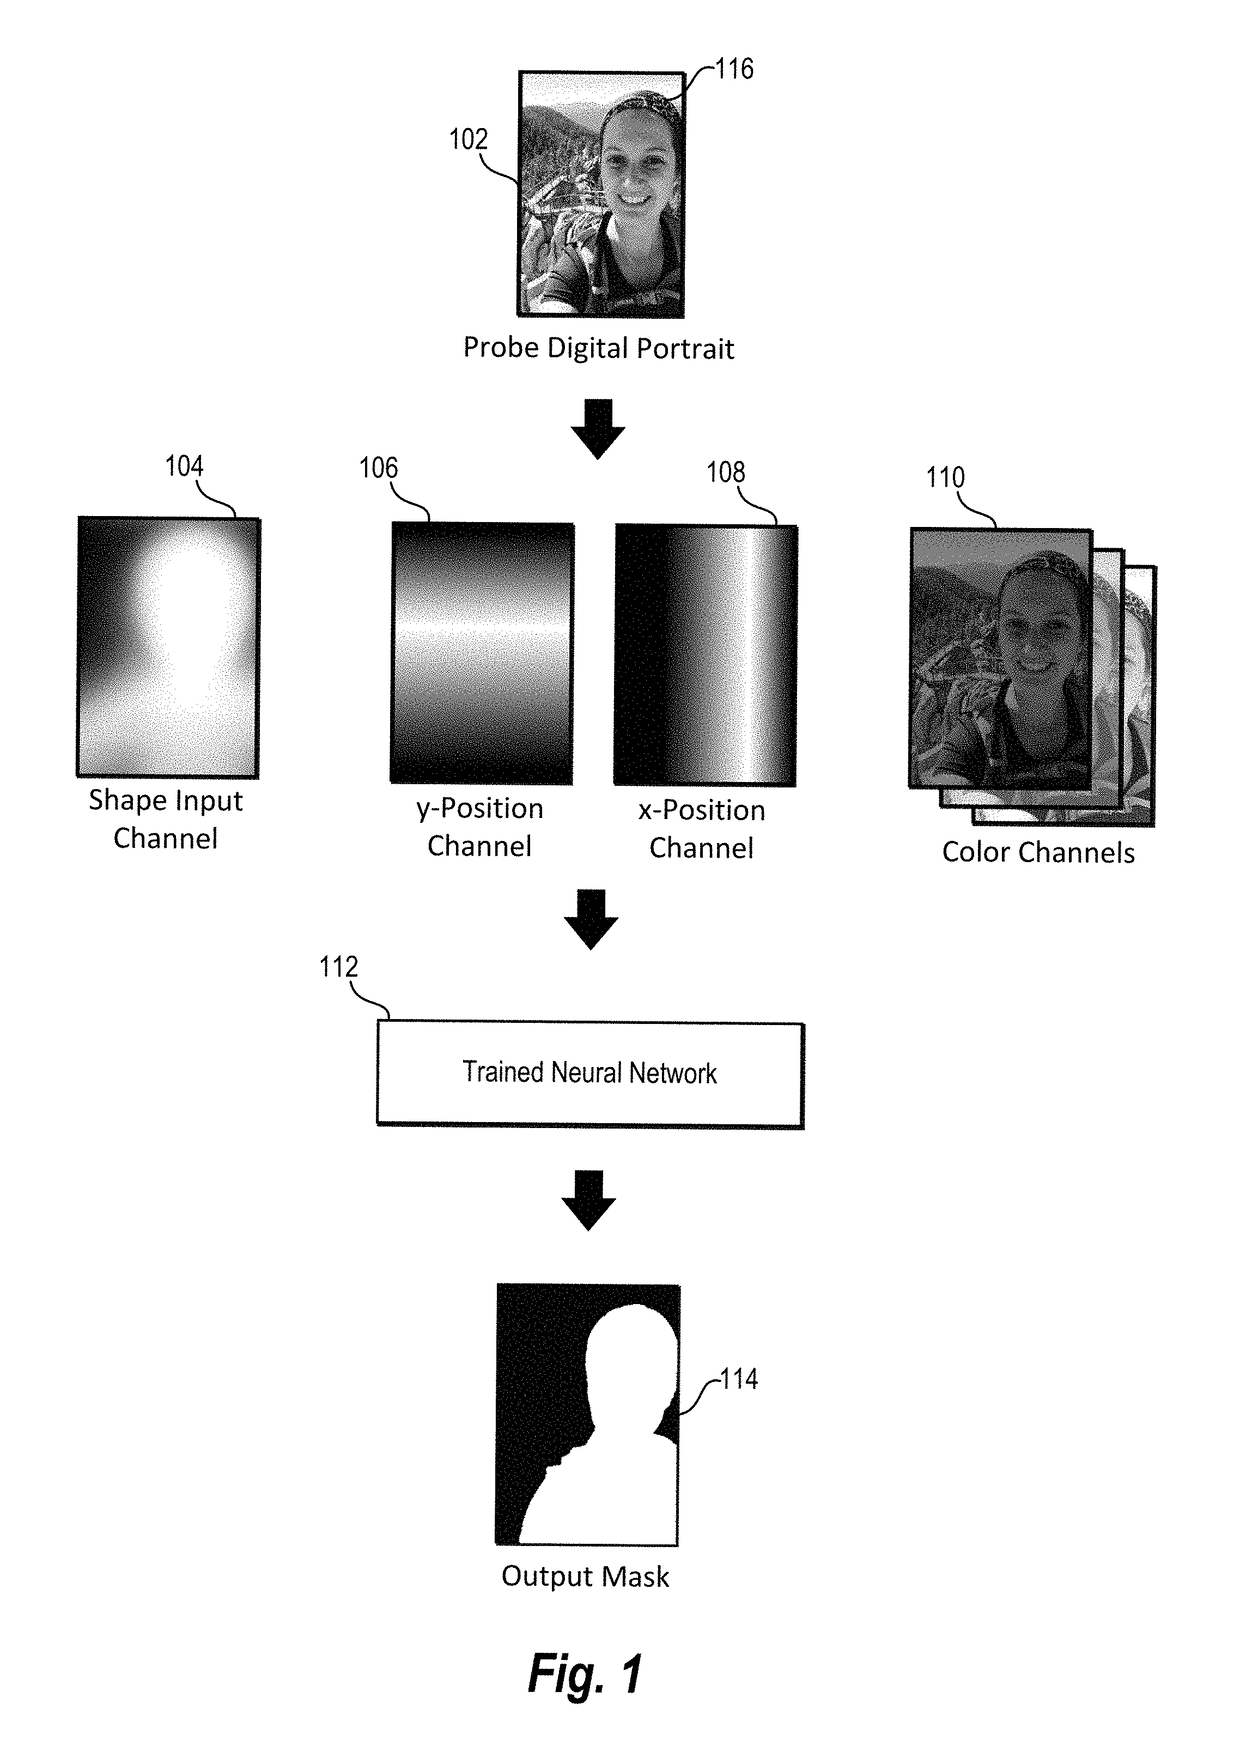 Utilizing deep learning for automatic digital image segmentation and stylization